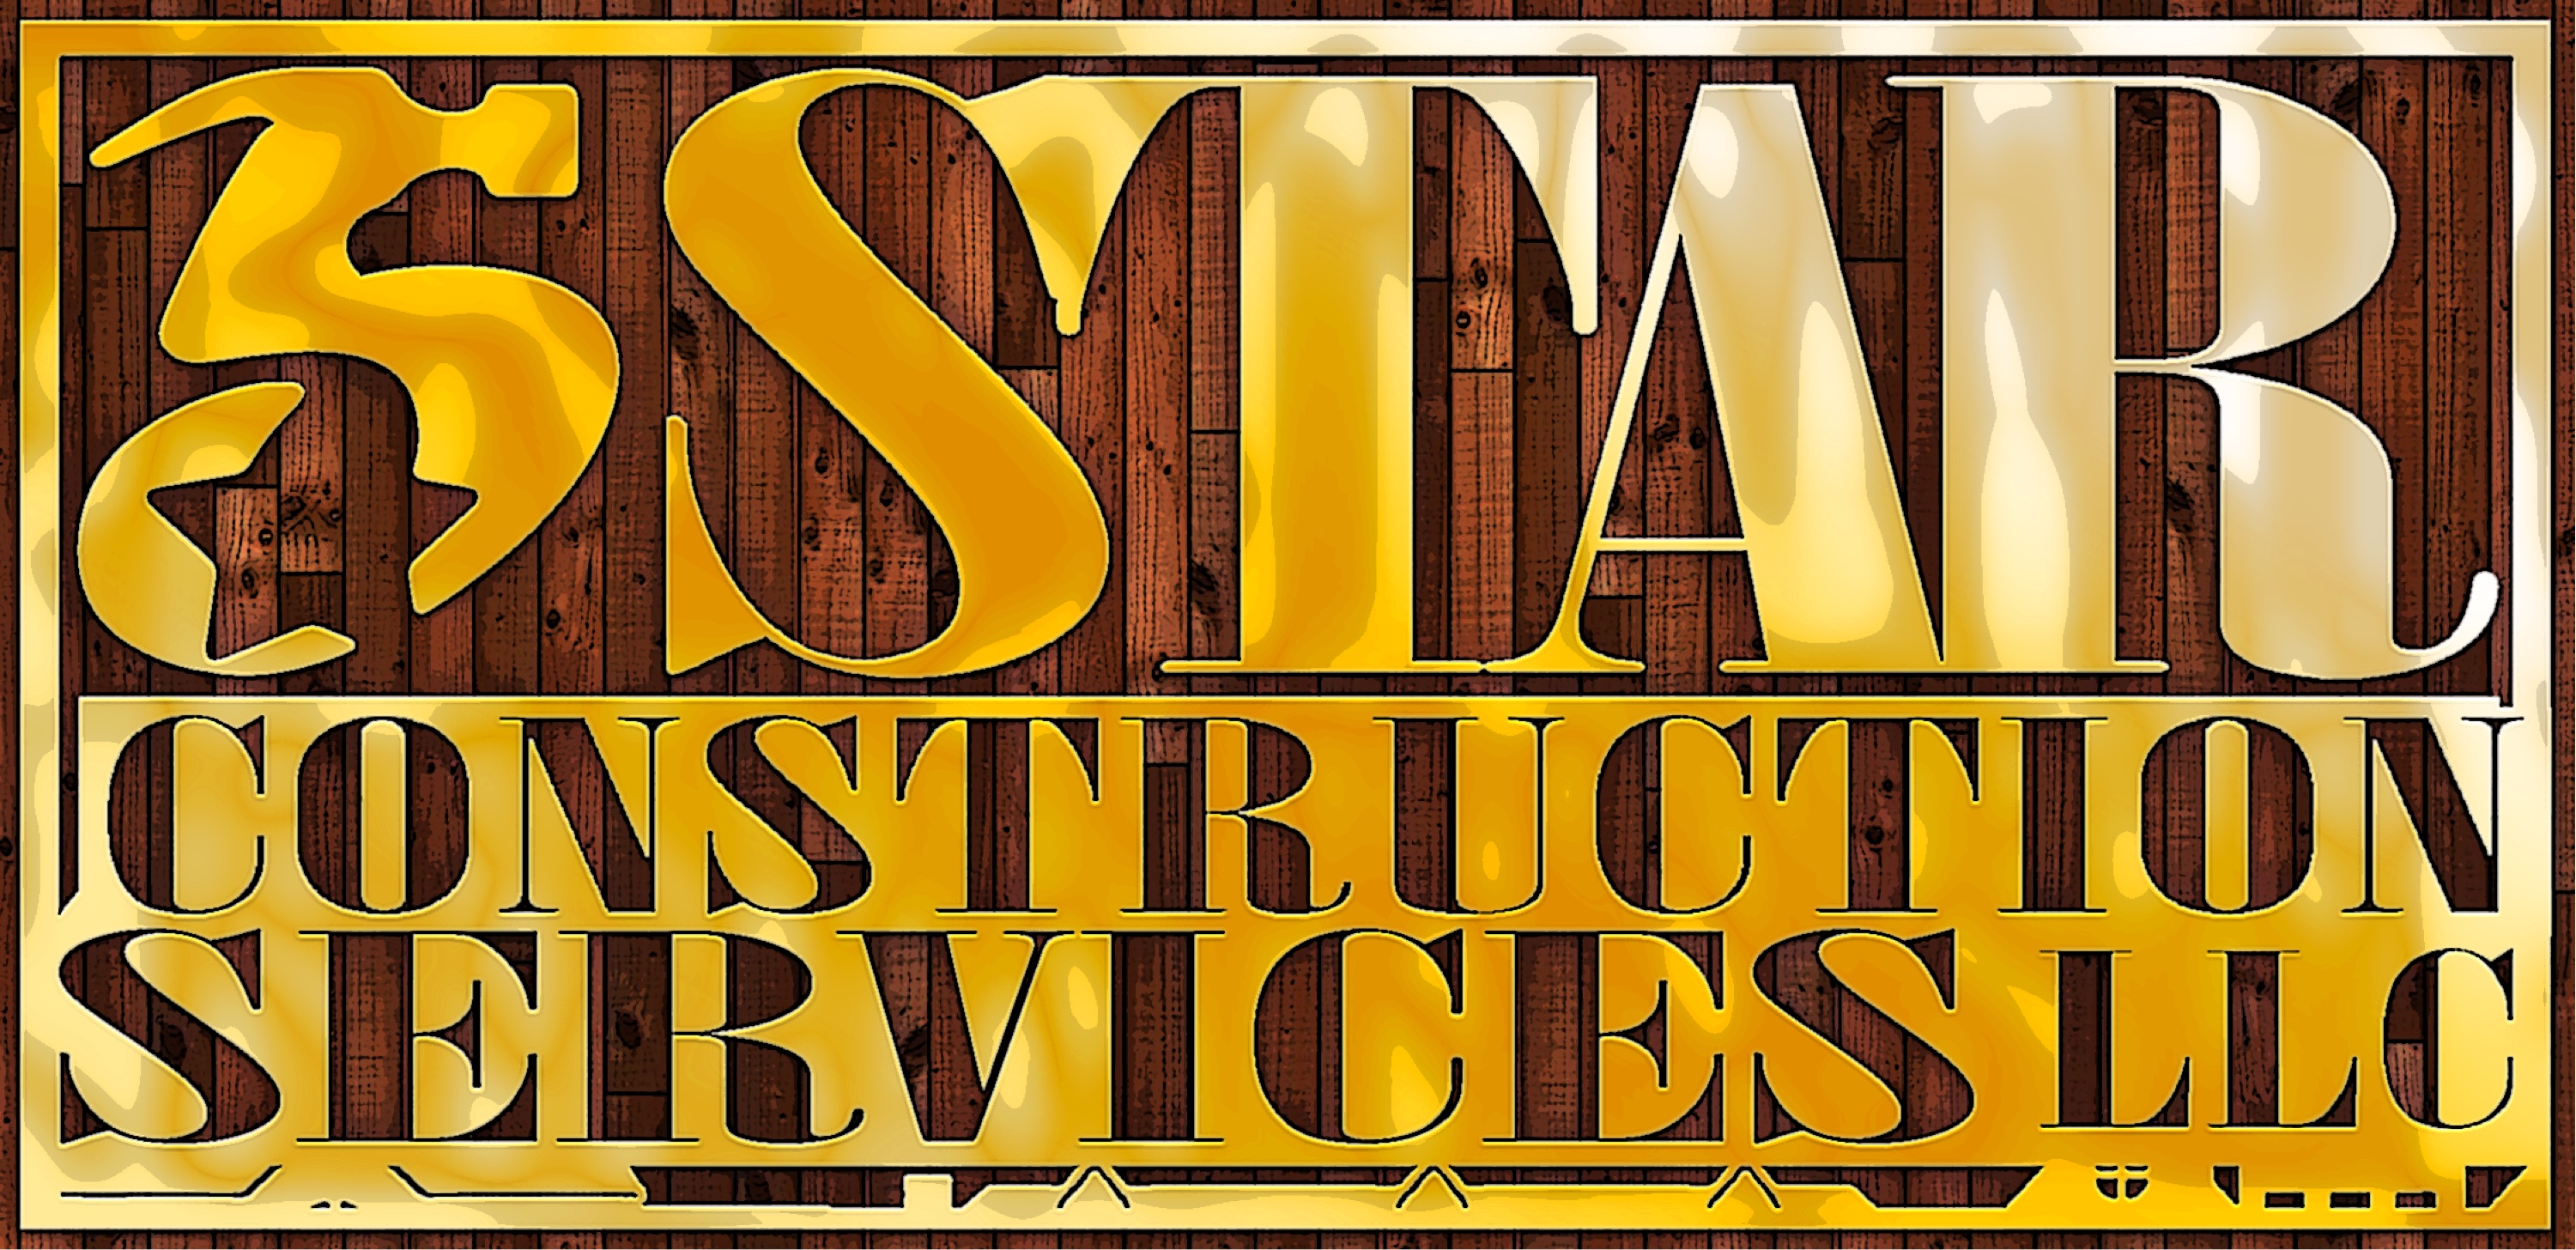 5 Star Construction Services Logo